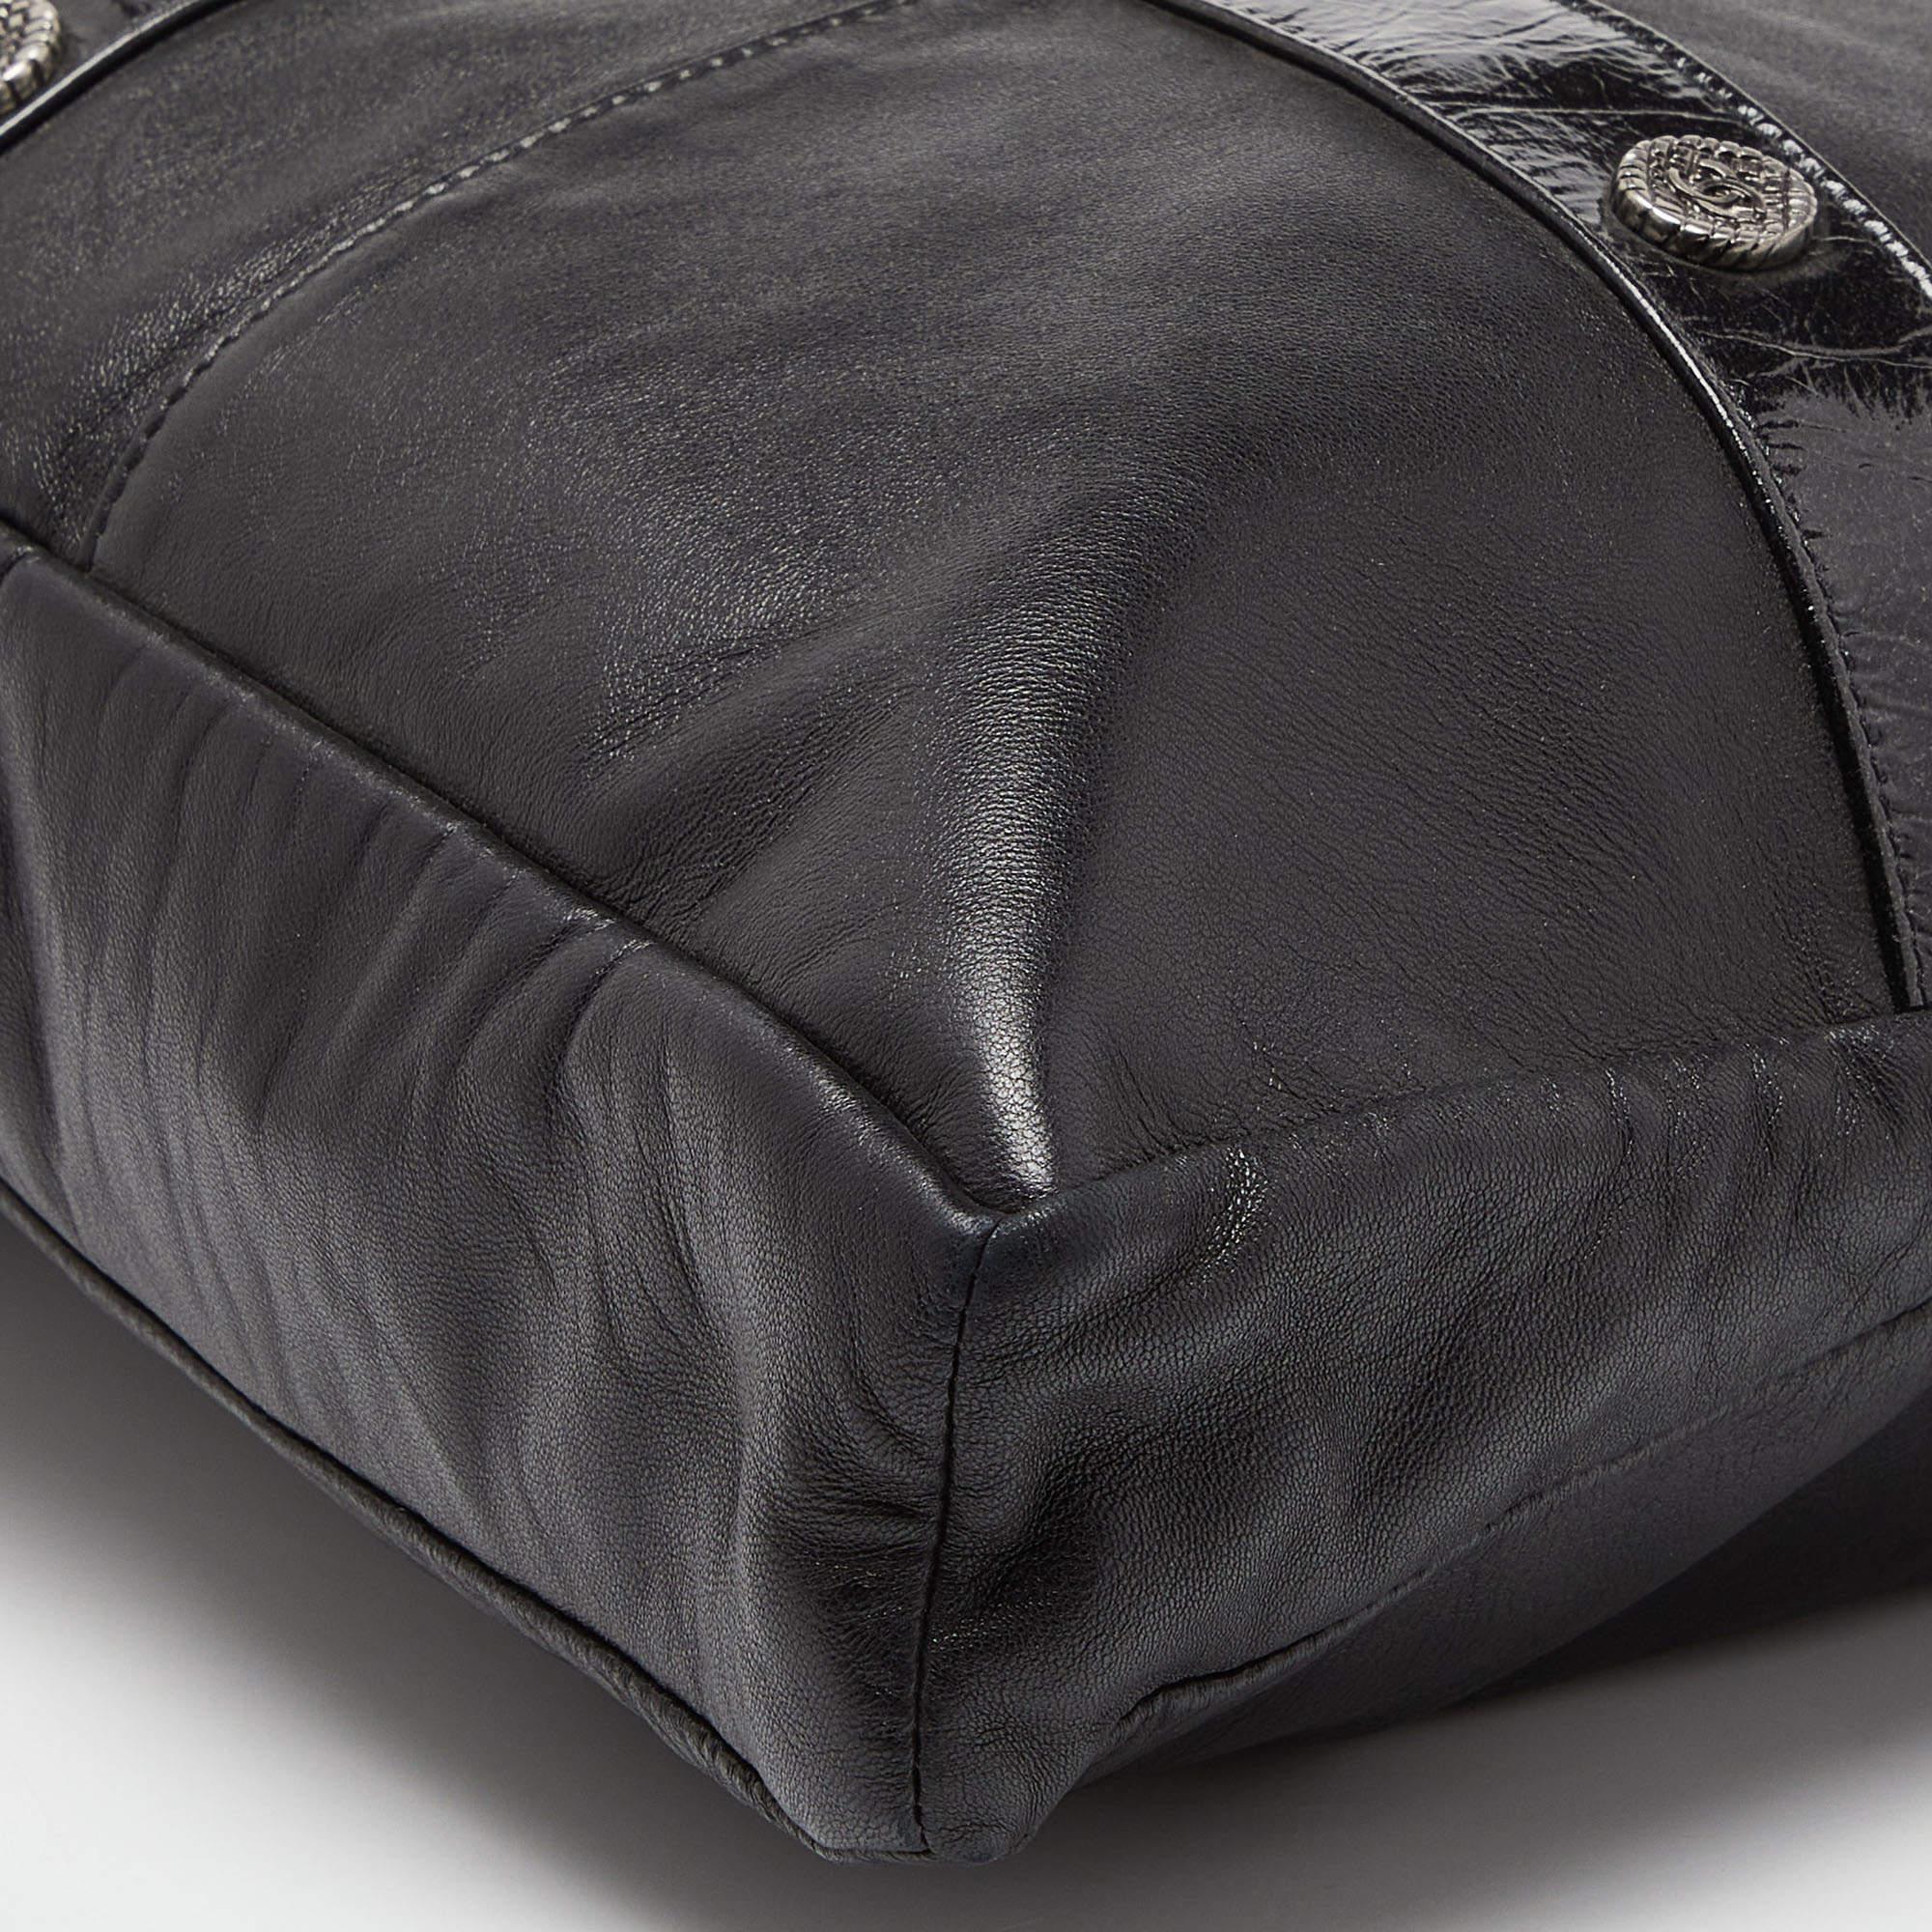 Chanel Black Leather Large Girl Chanel Bag For Sale 1